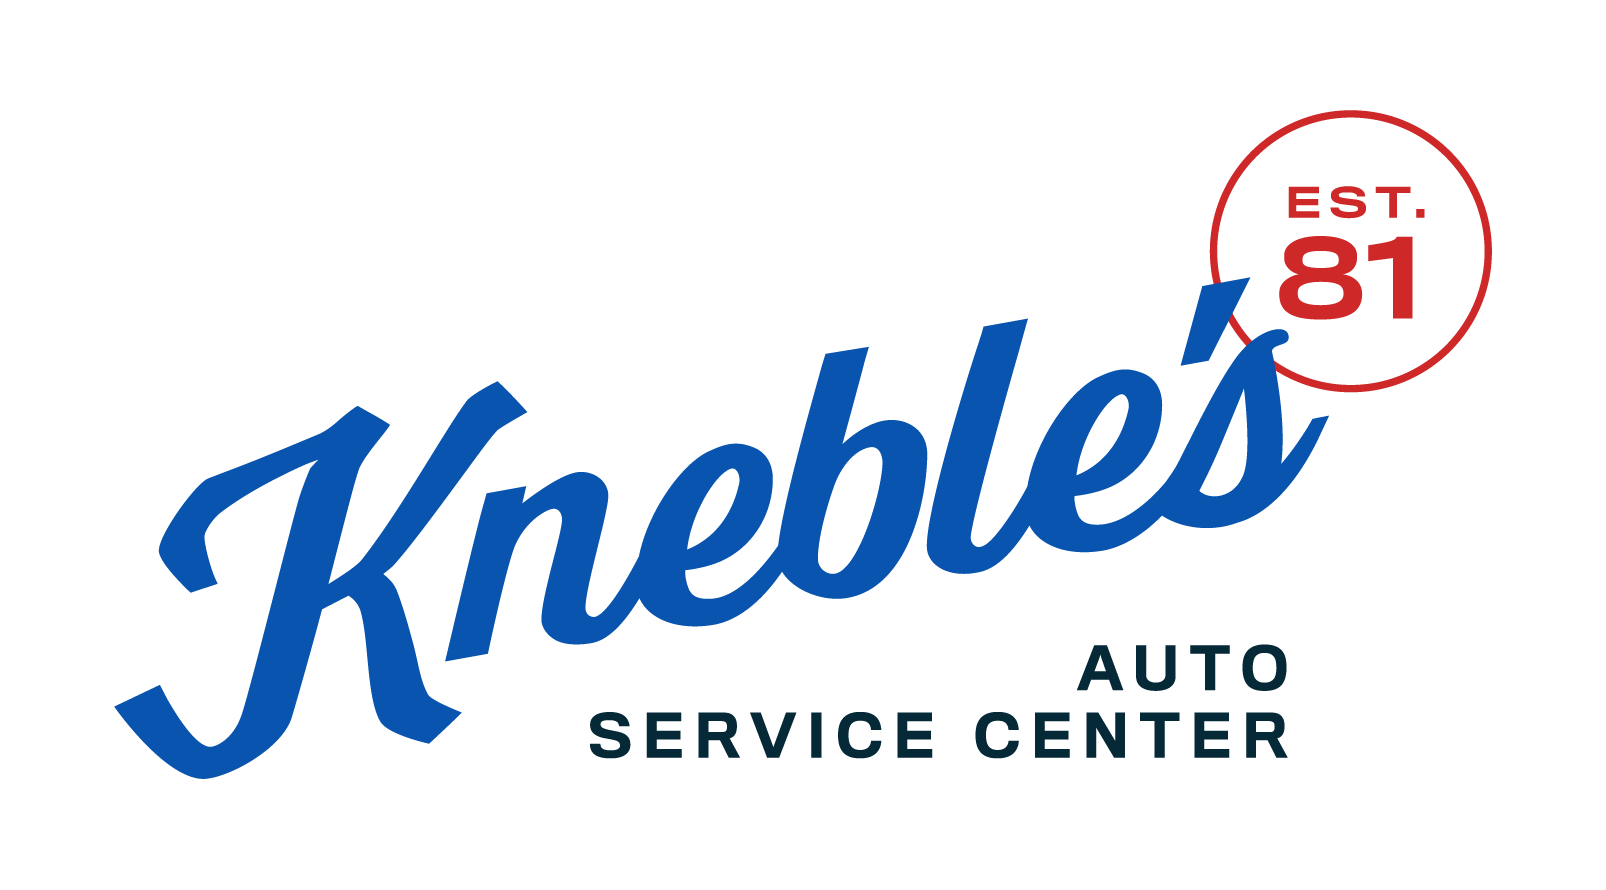 Kneble's Auto Service Center